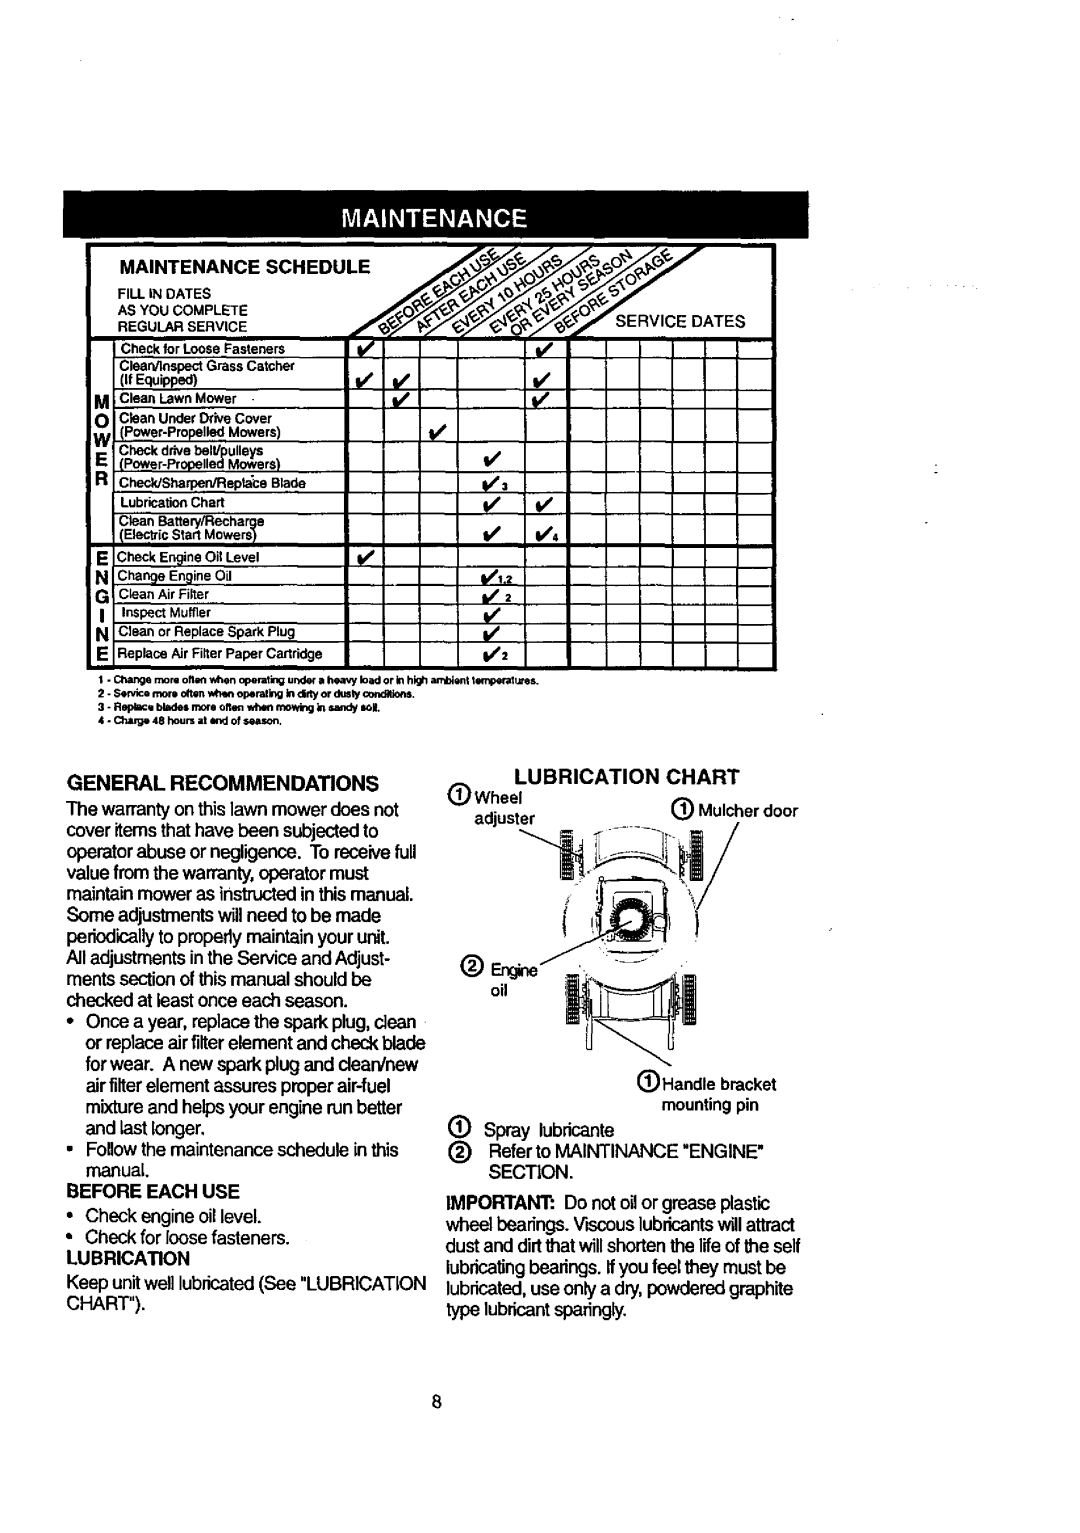 Craftsman 917.38823 owner manual Antenancesc.Eoule, s YOUCOMPL 